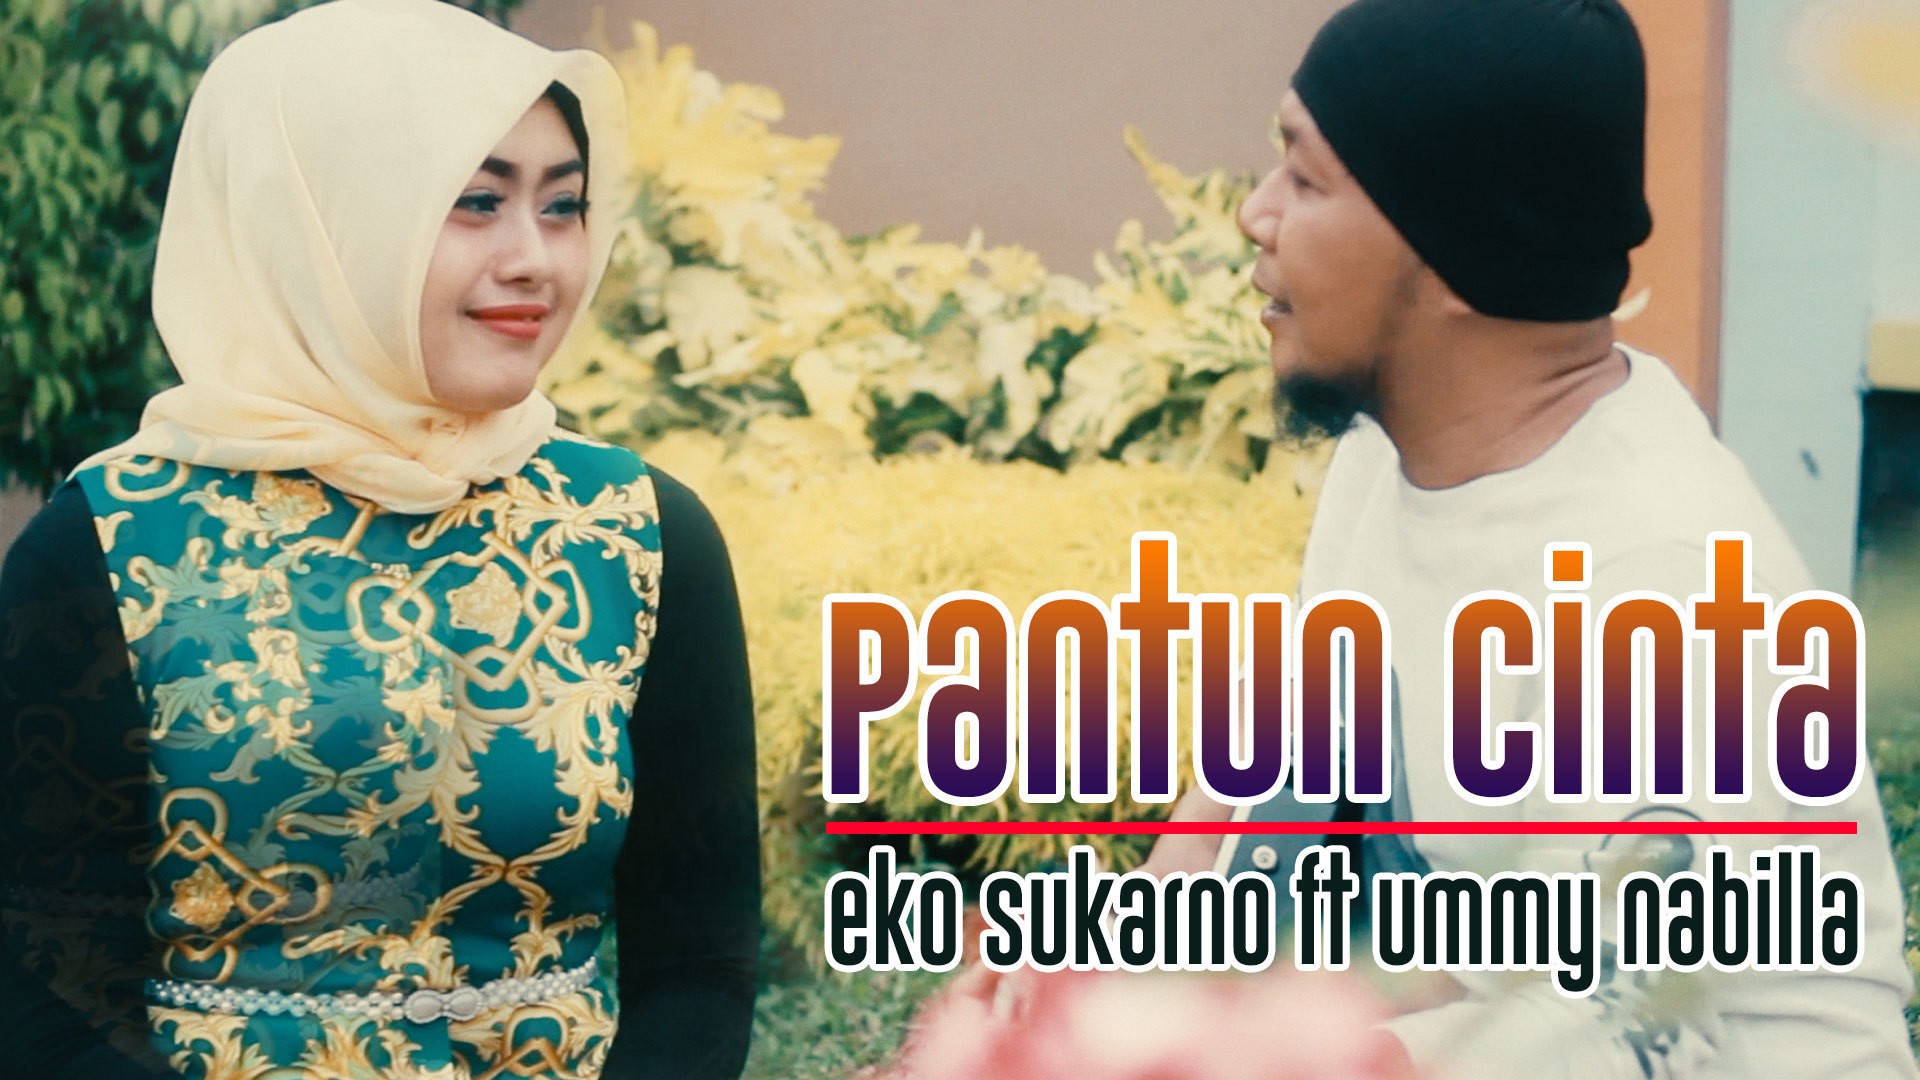 Pantun Cinta Cover Akustik Eko Sukarno Feat Ummy Nabilla Vidio